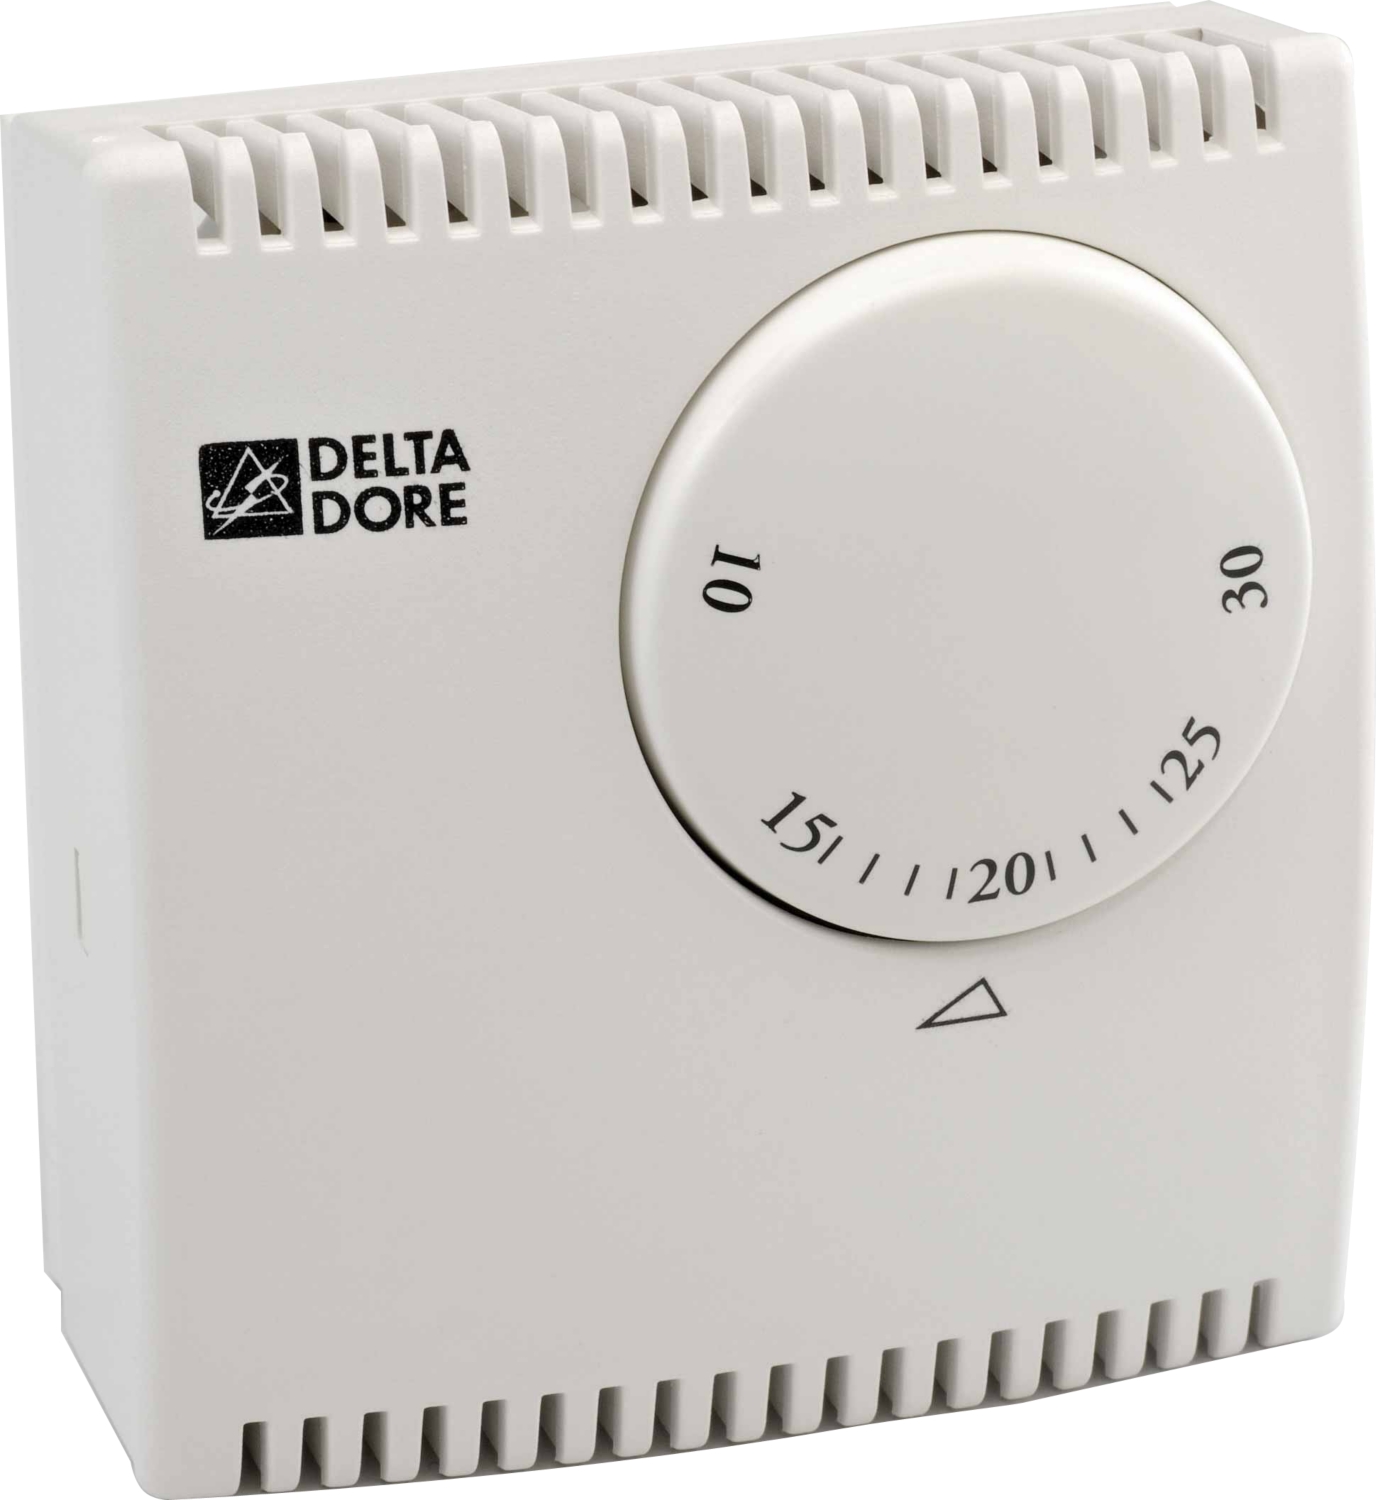 Thermostat mécanique filaire TYBOX 10 Delta Dore